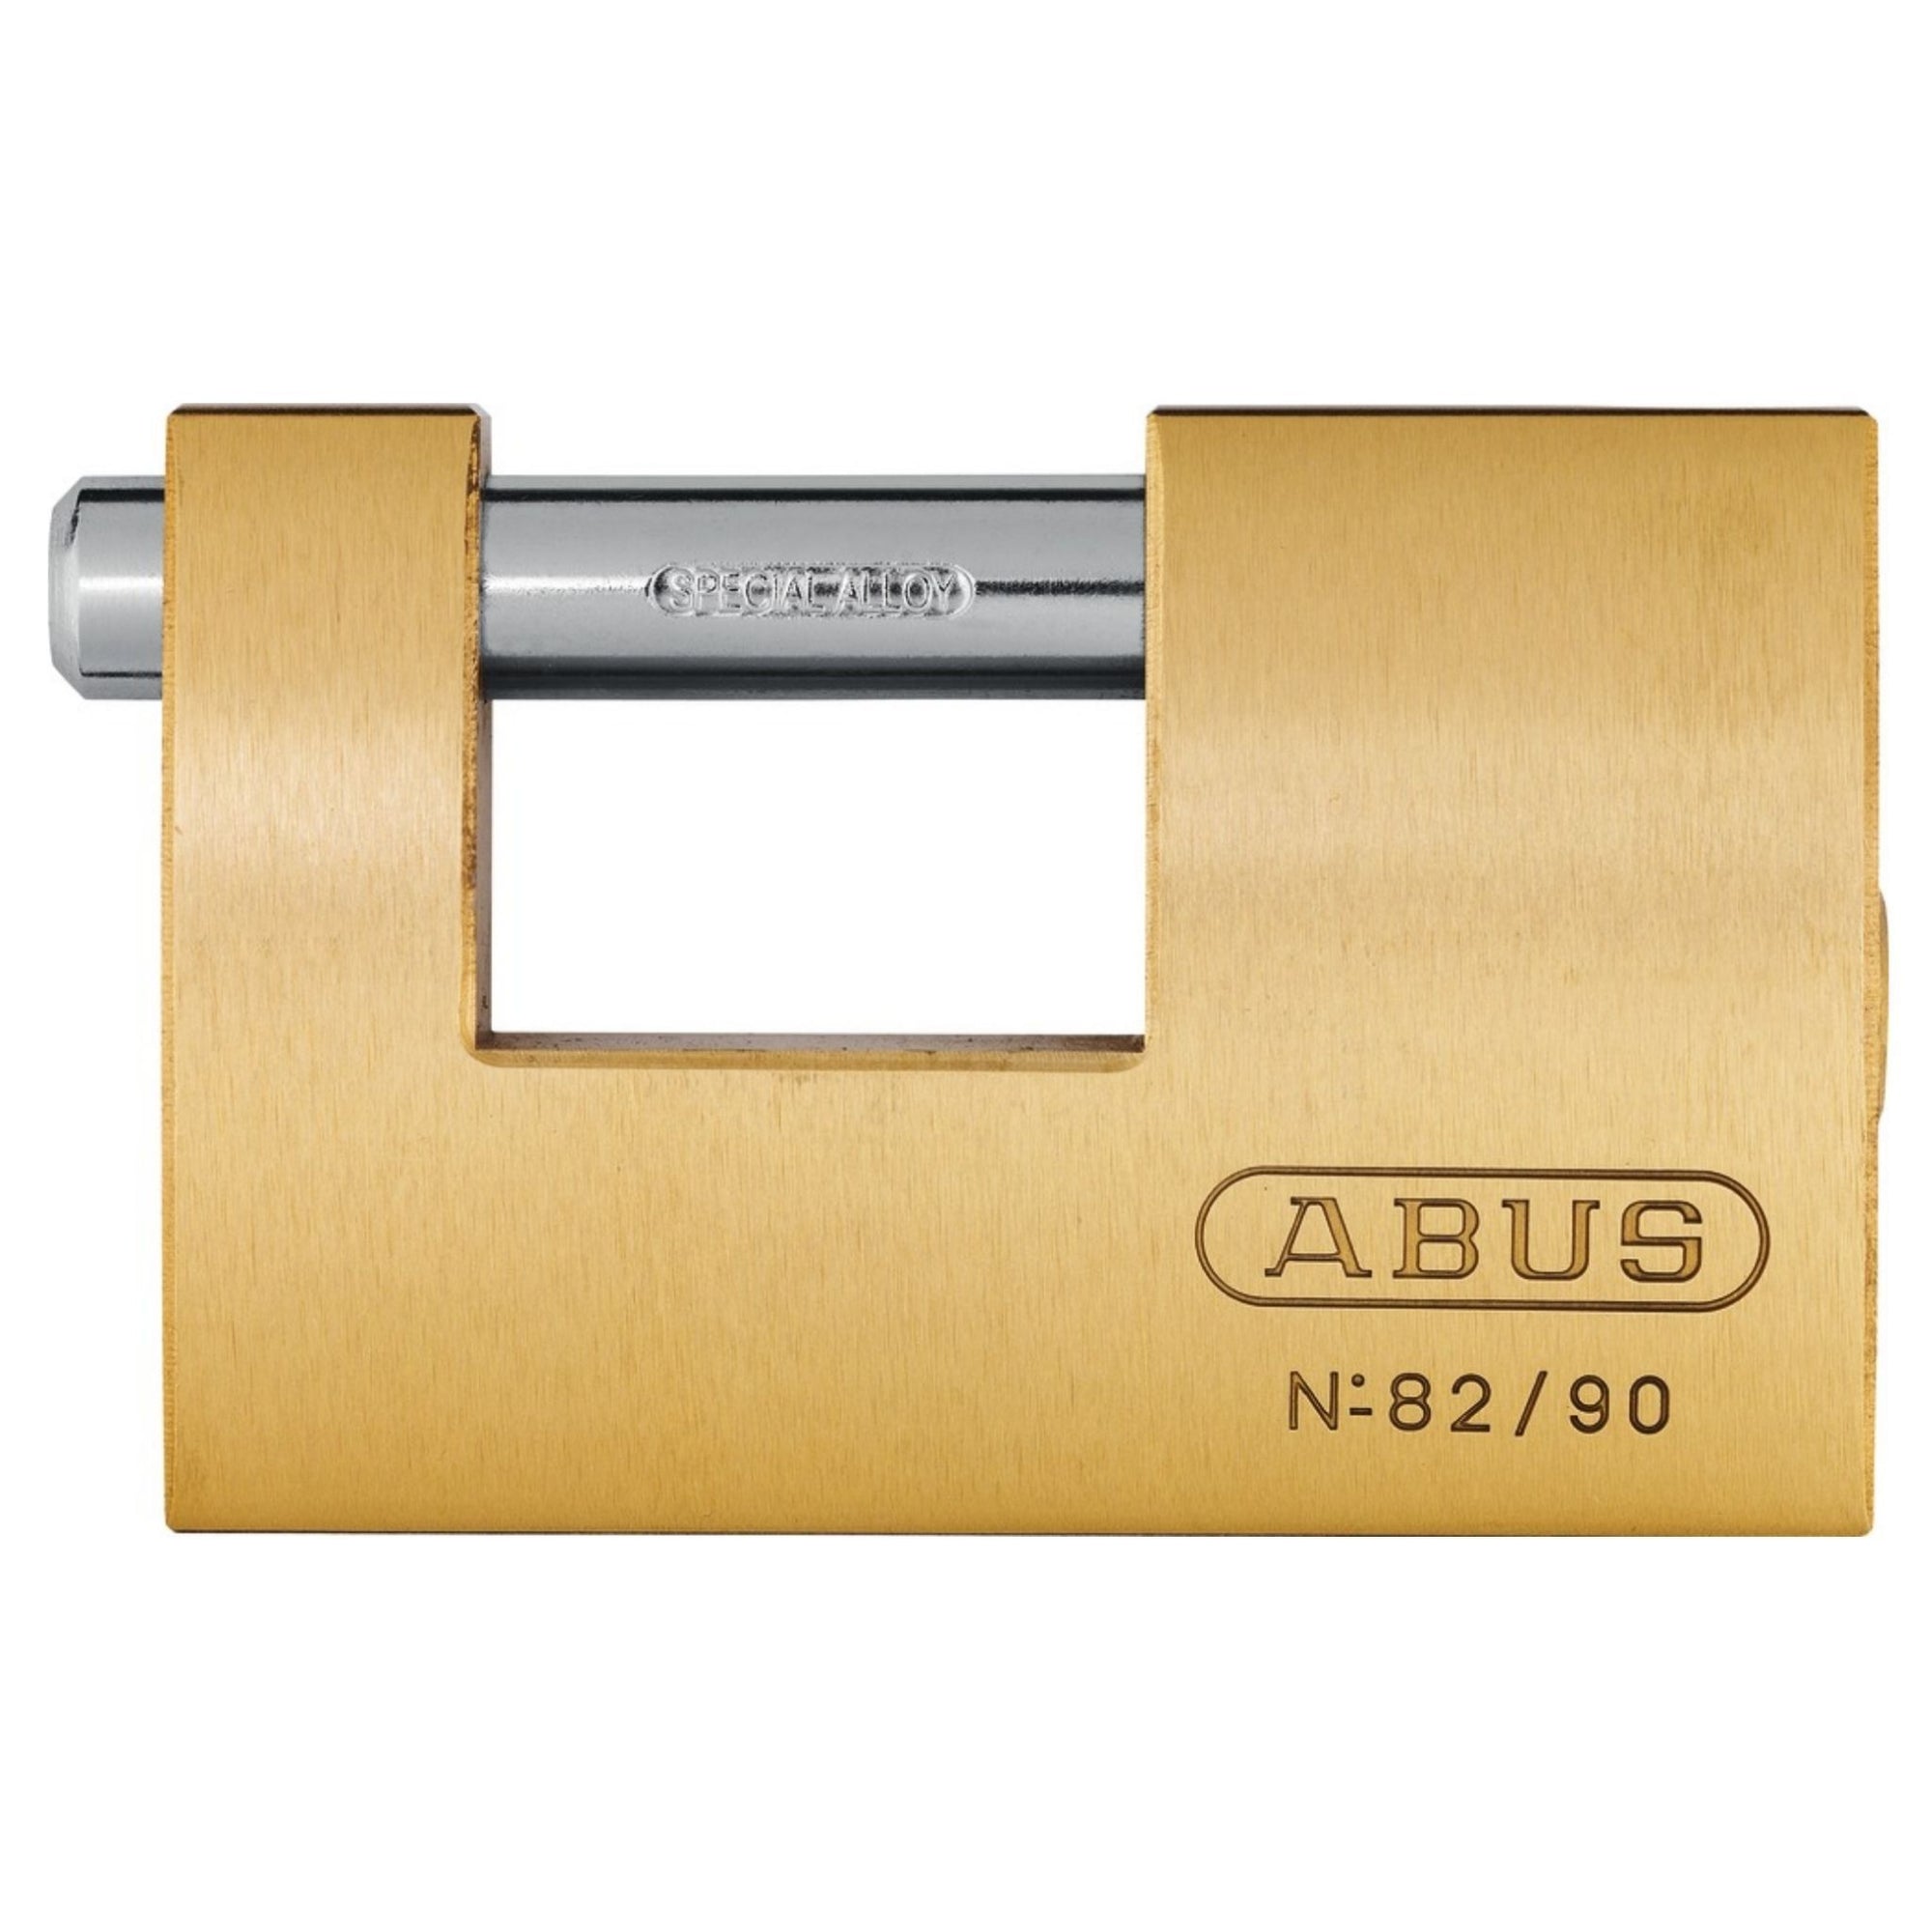 Abus 82/90 KA 8522 Monoblock Lock Brass Mono Padlock Keyed Alike to Match Existing Key# 8522 - The Lock Source